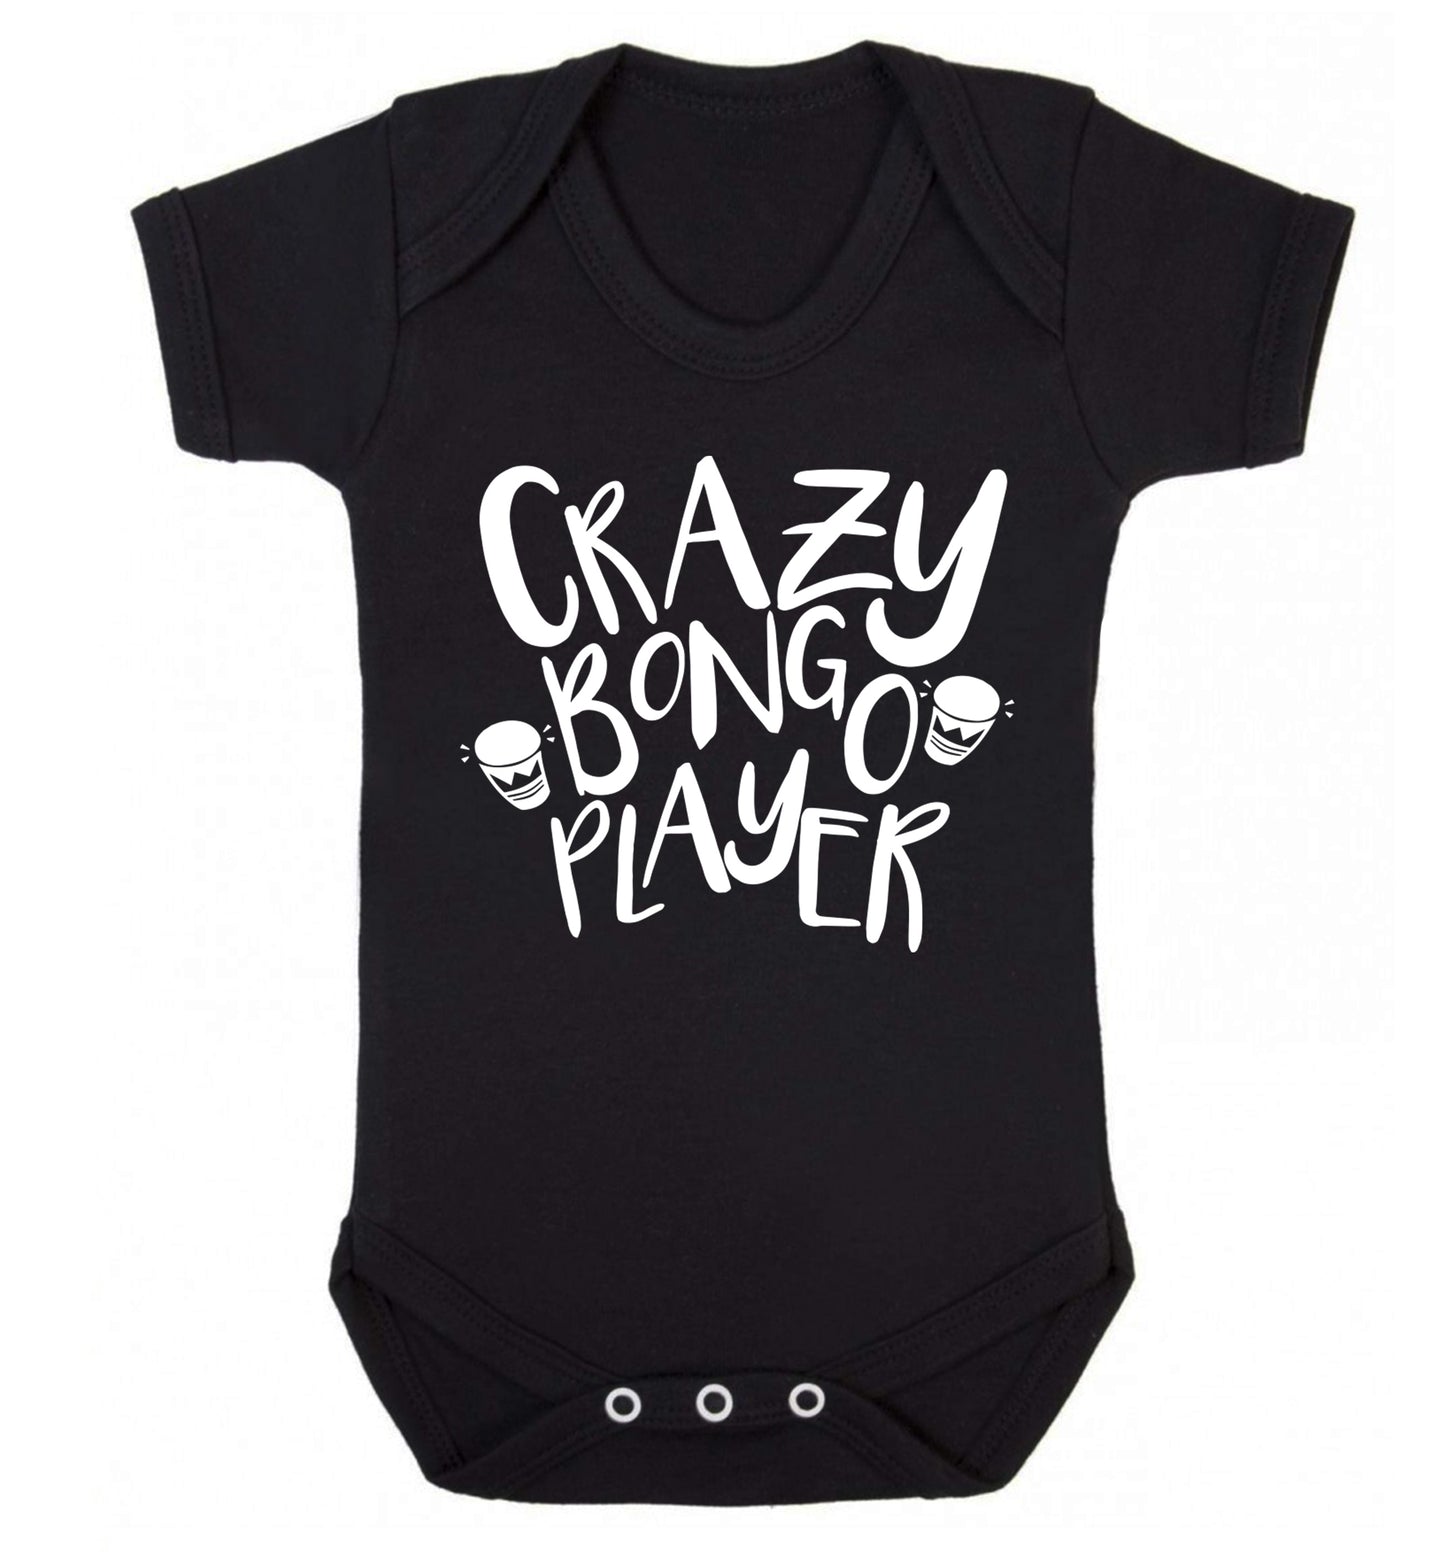 Crazy bongo player Baby Vest black 18-24 months